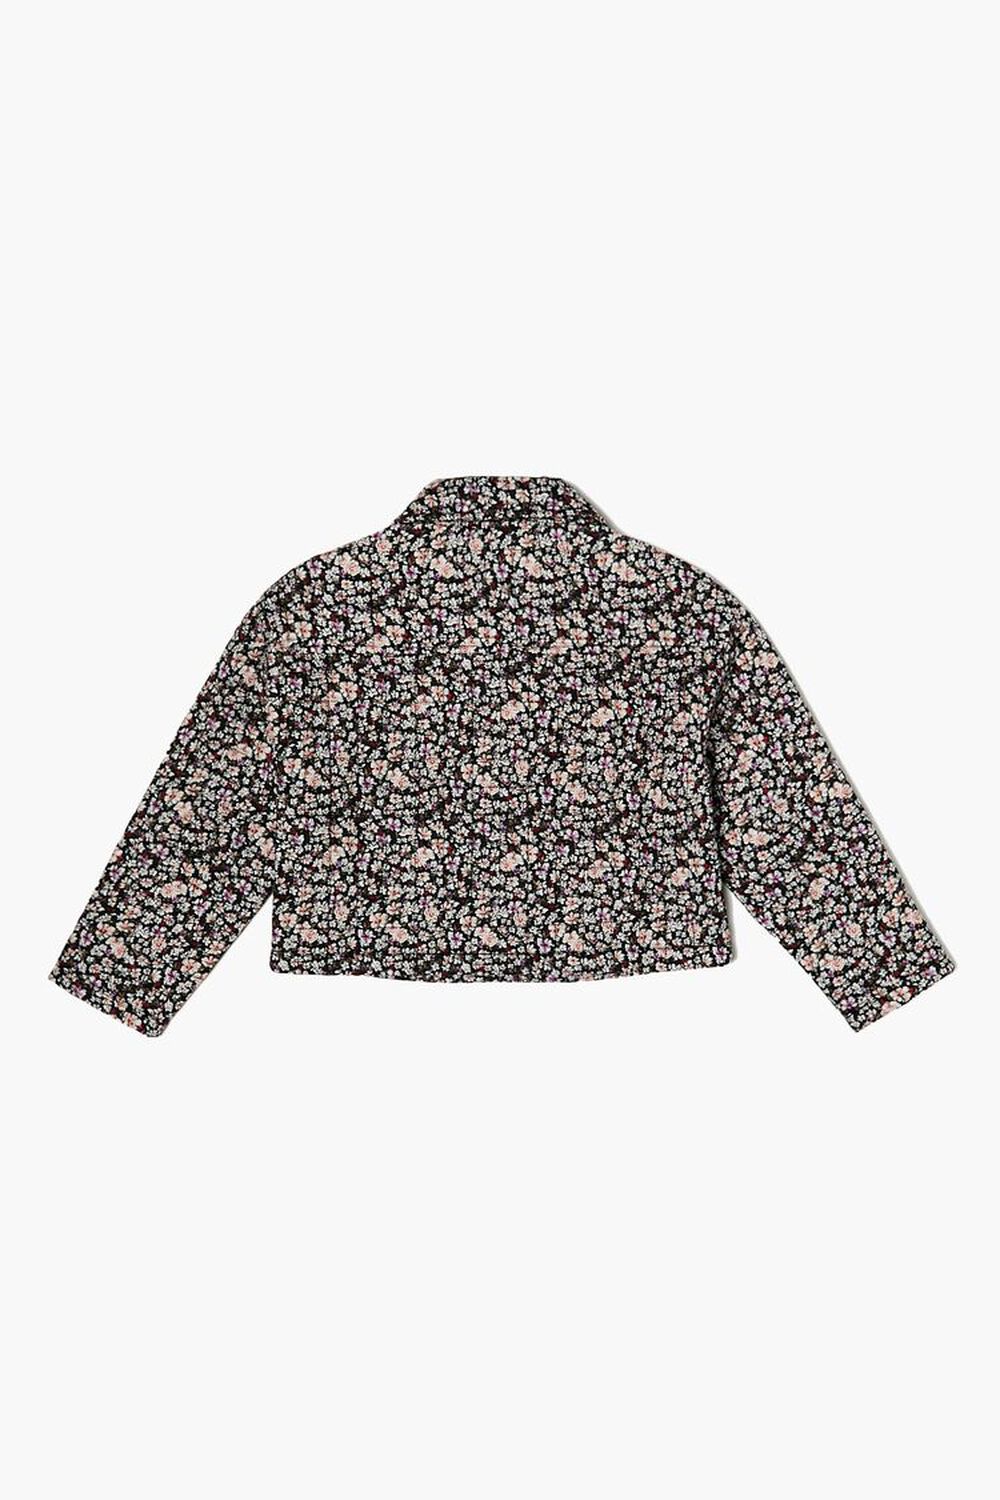 BLACK/MULTI Girls Quilted Floral Print Jacket (Kids), image 2